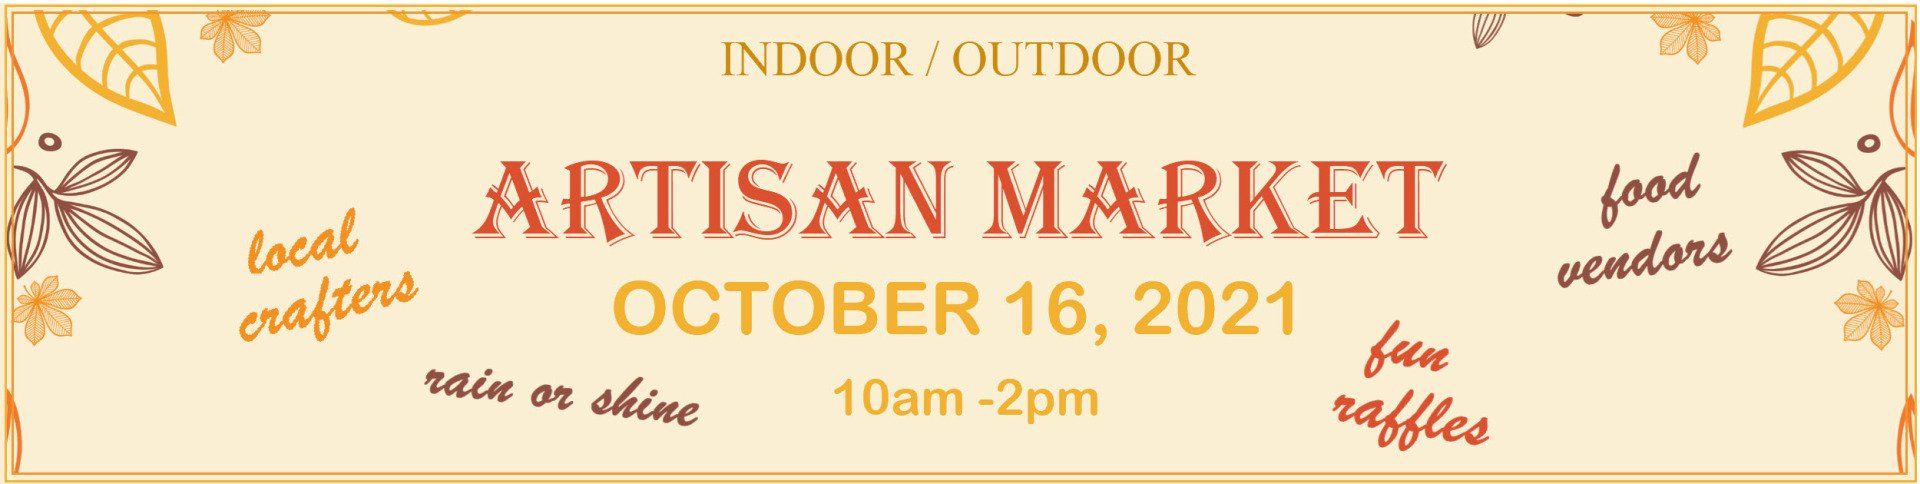 Artisan Market event information